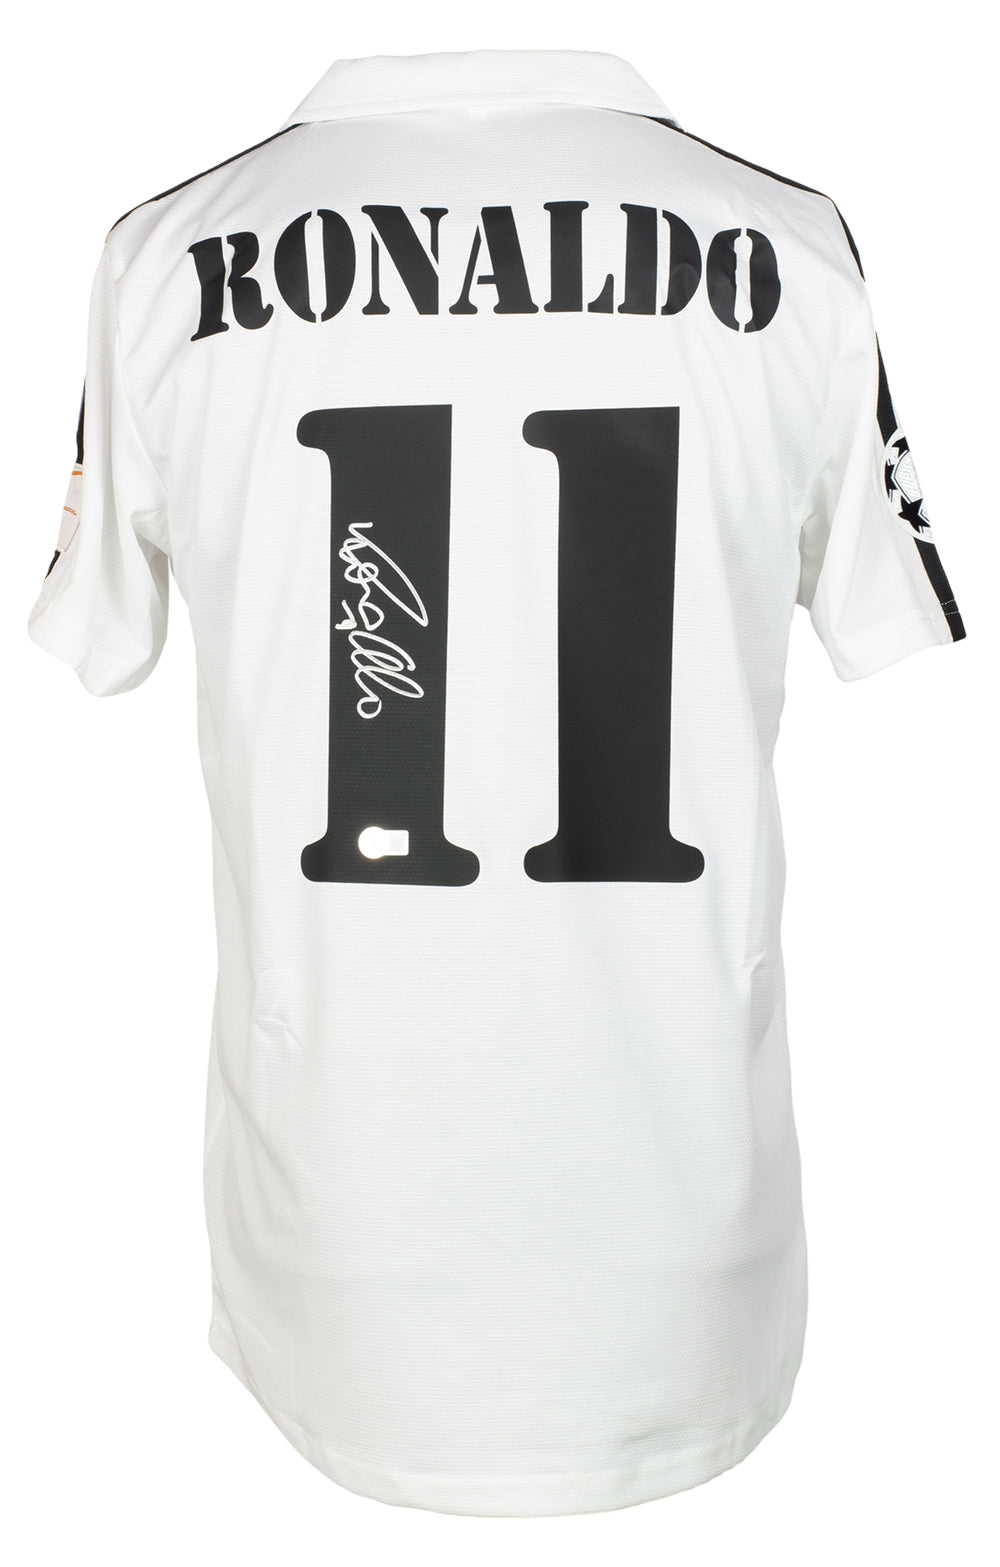 ronaldo signed jersey